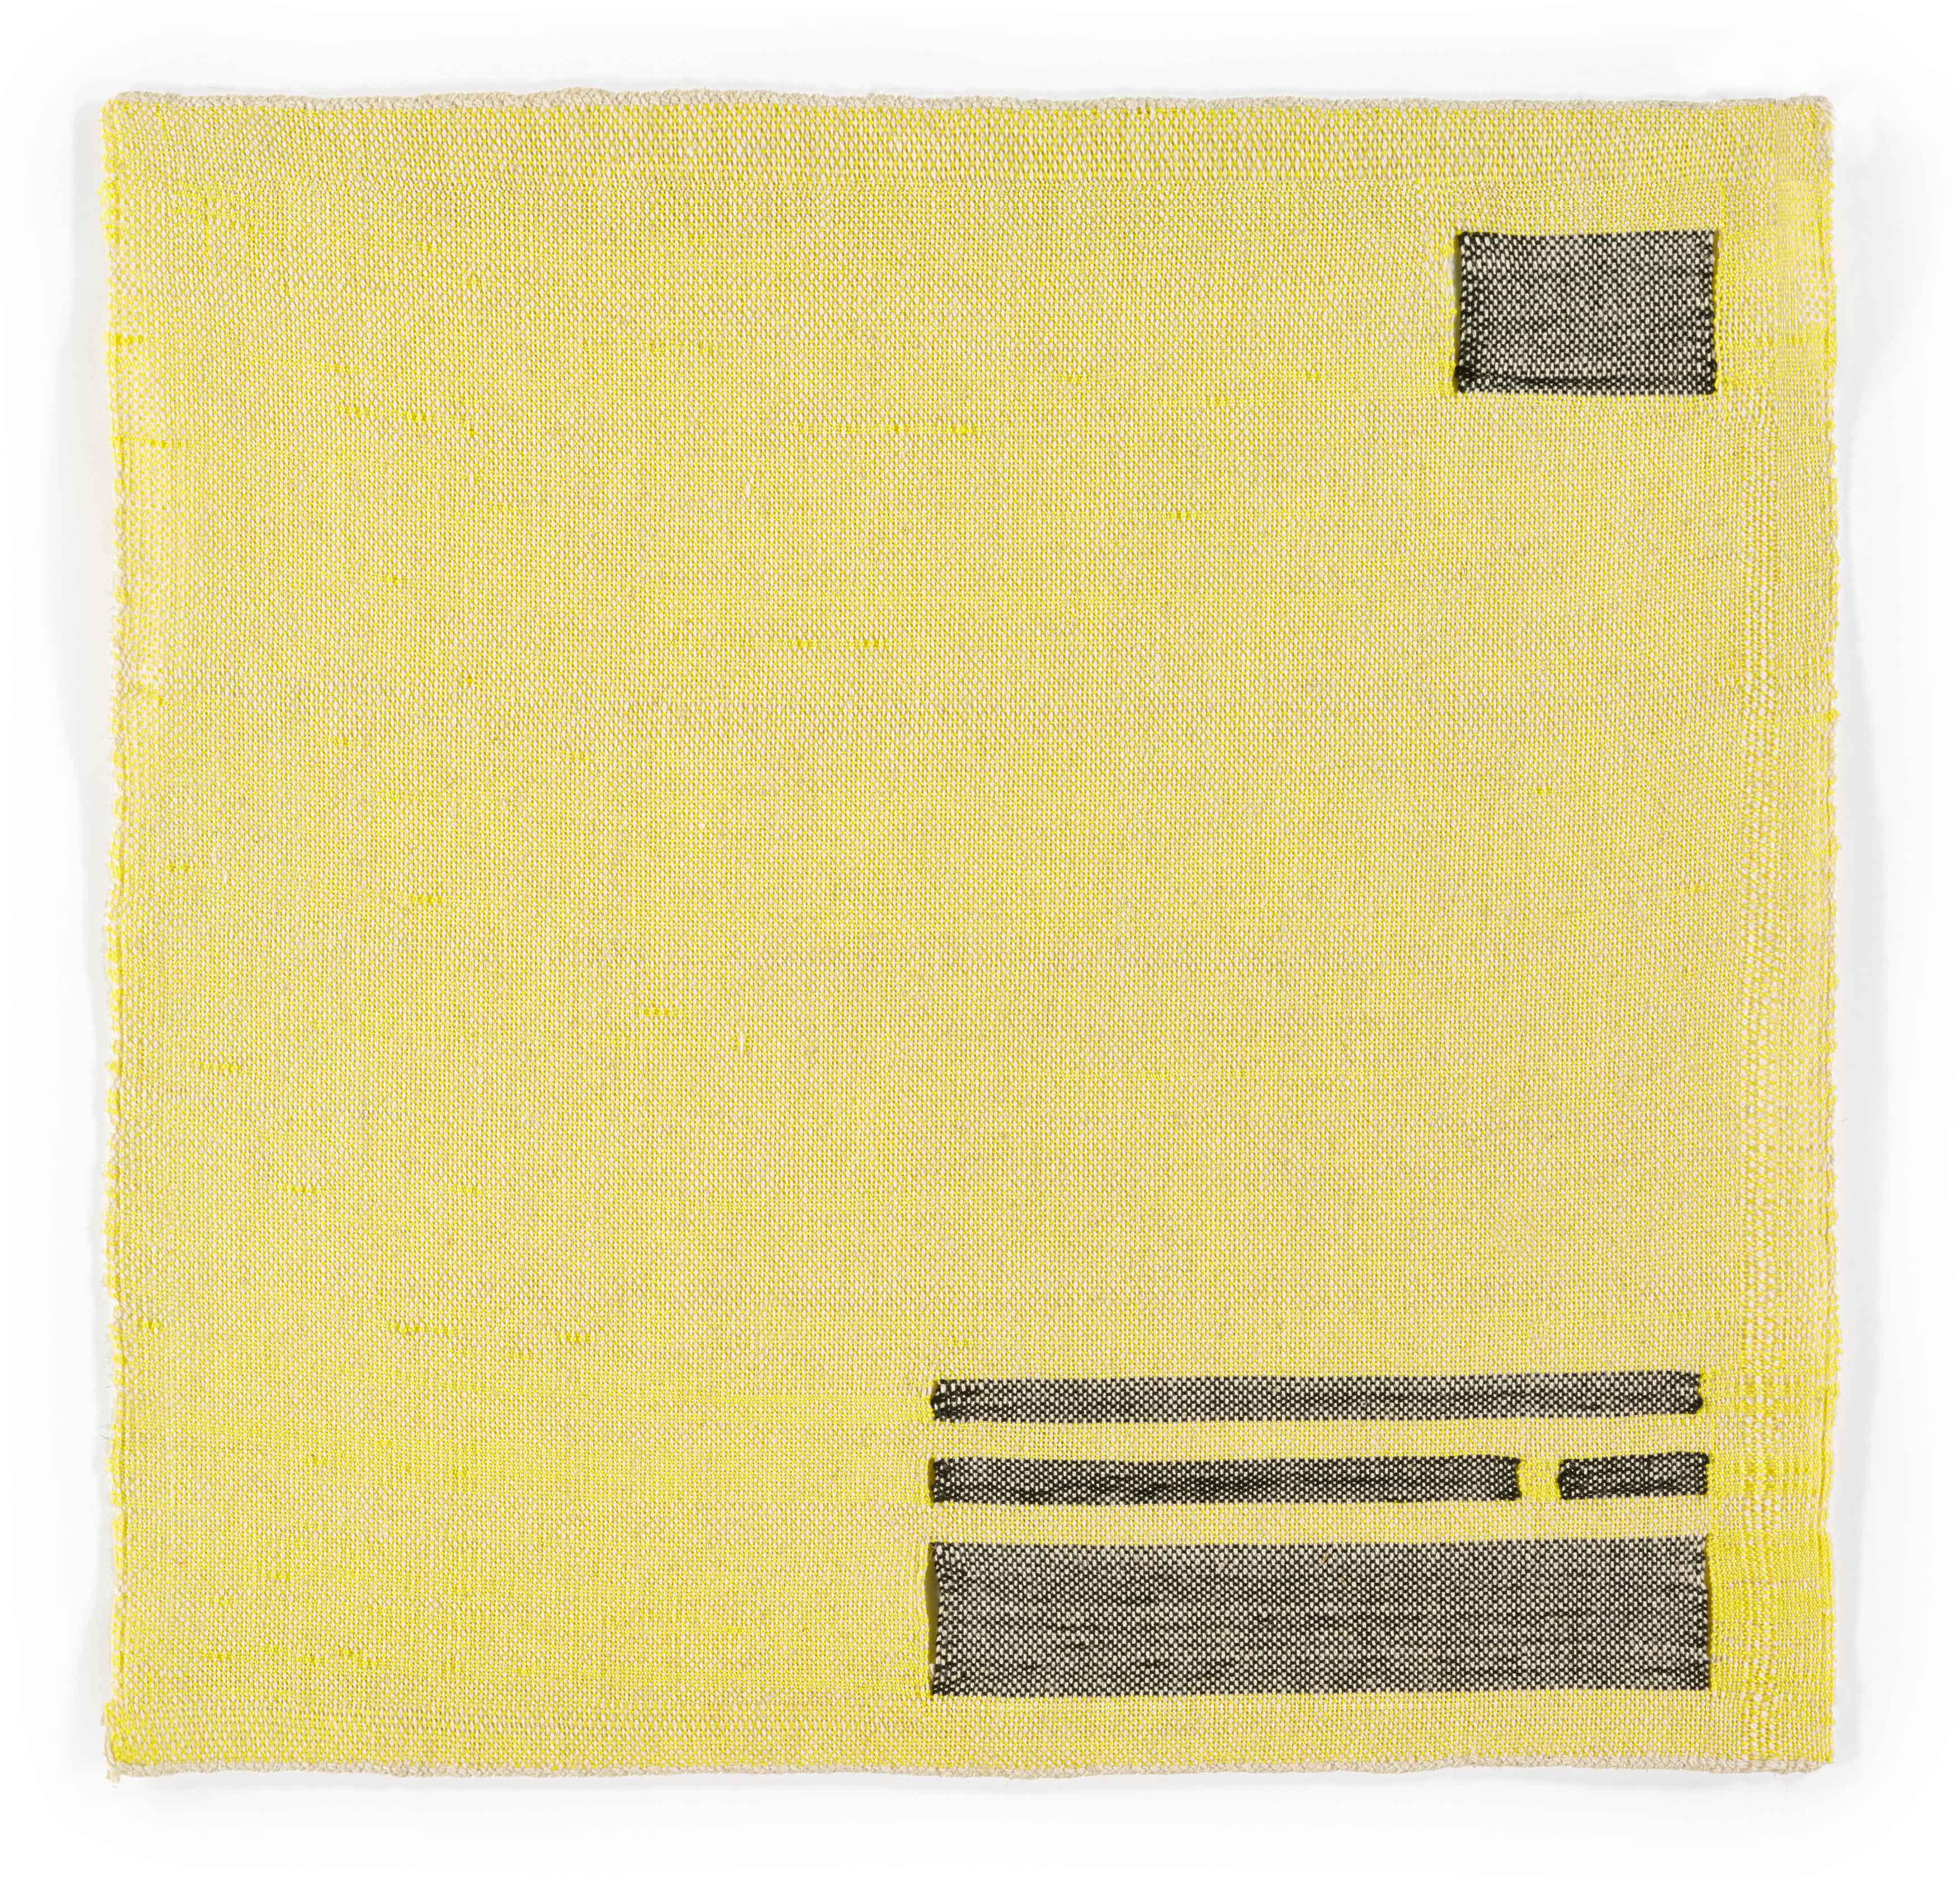 Yellow Weave, 2019